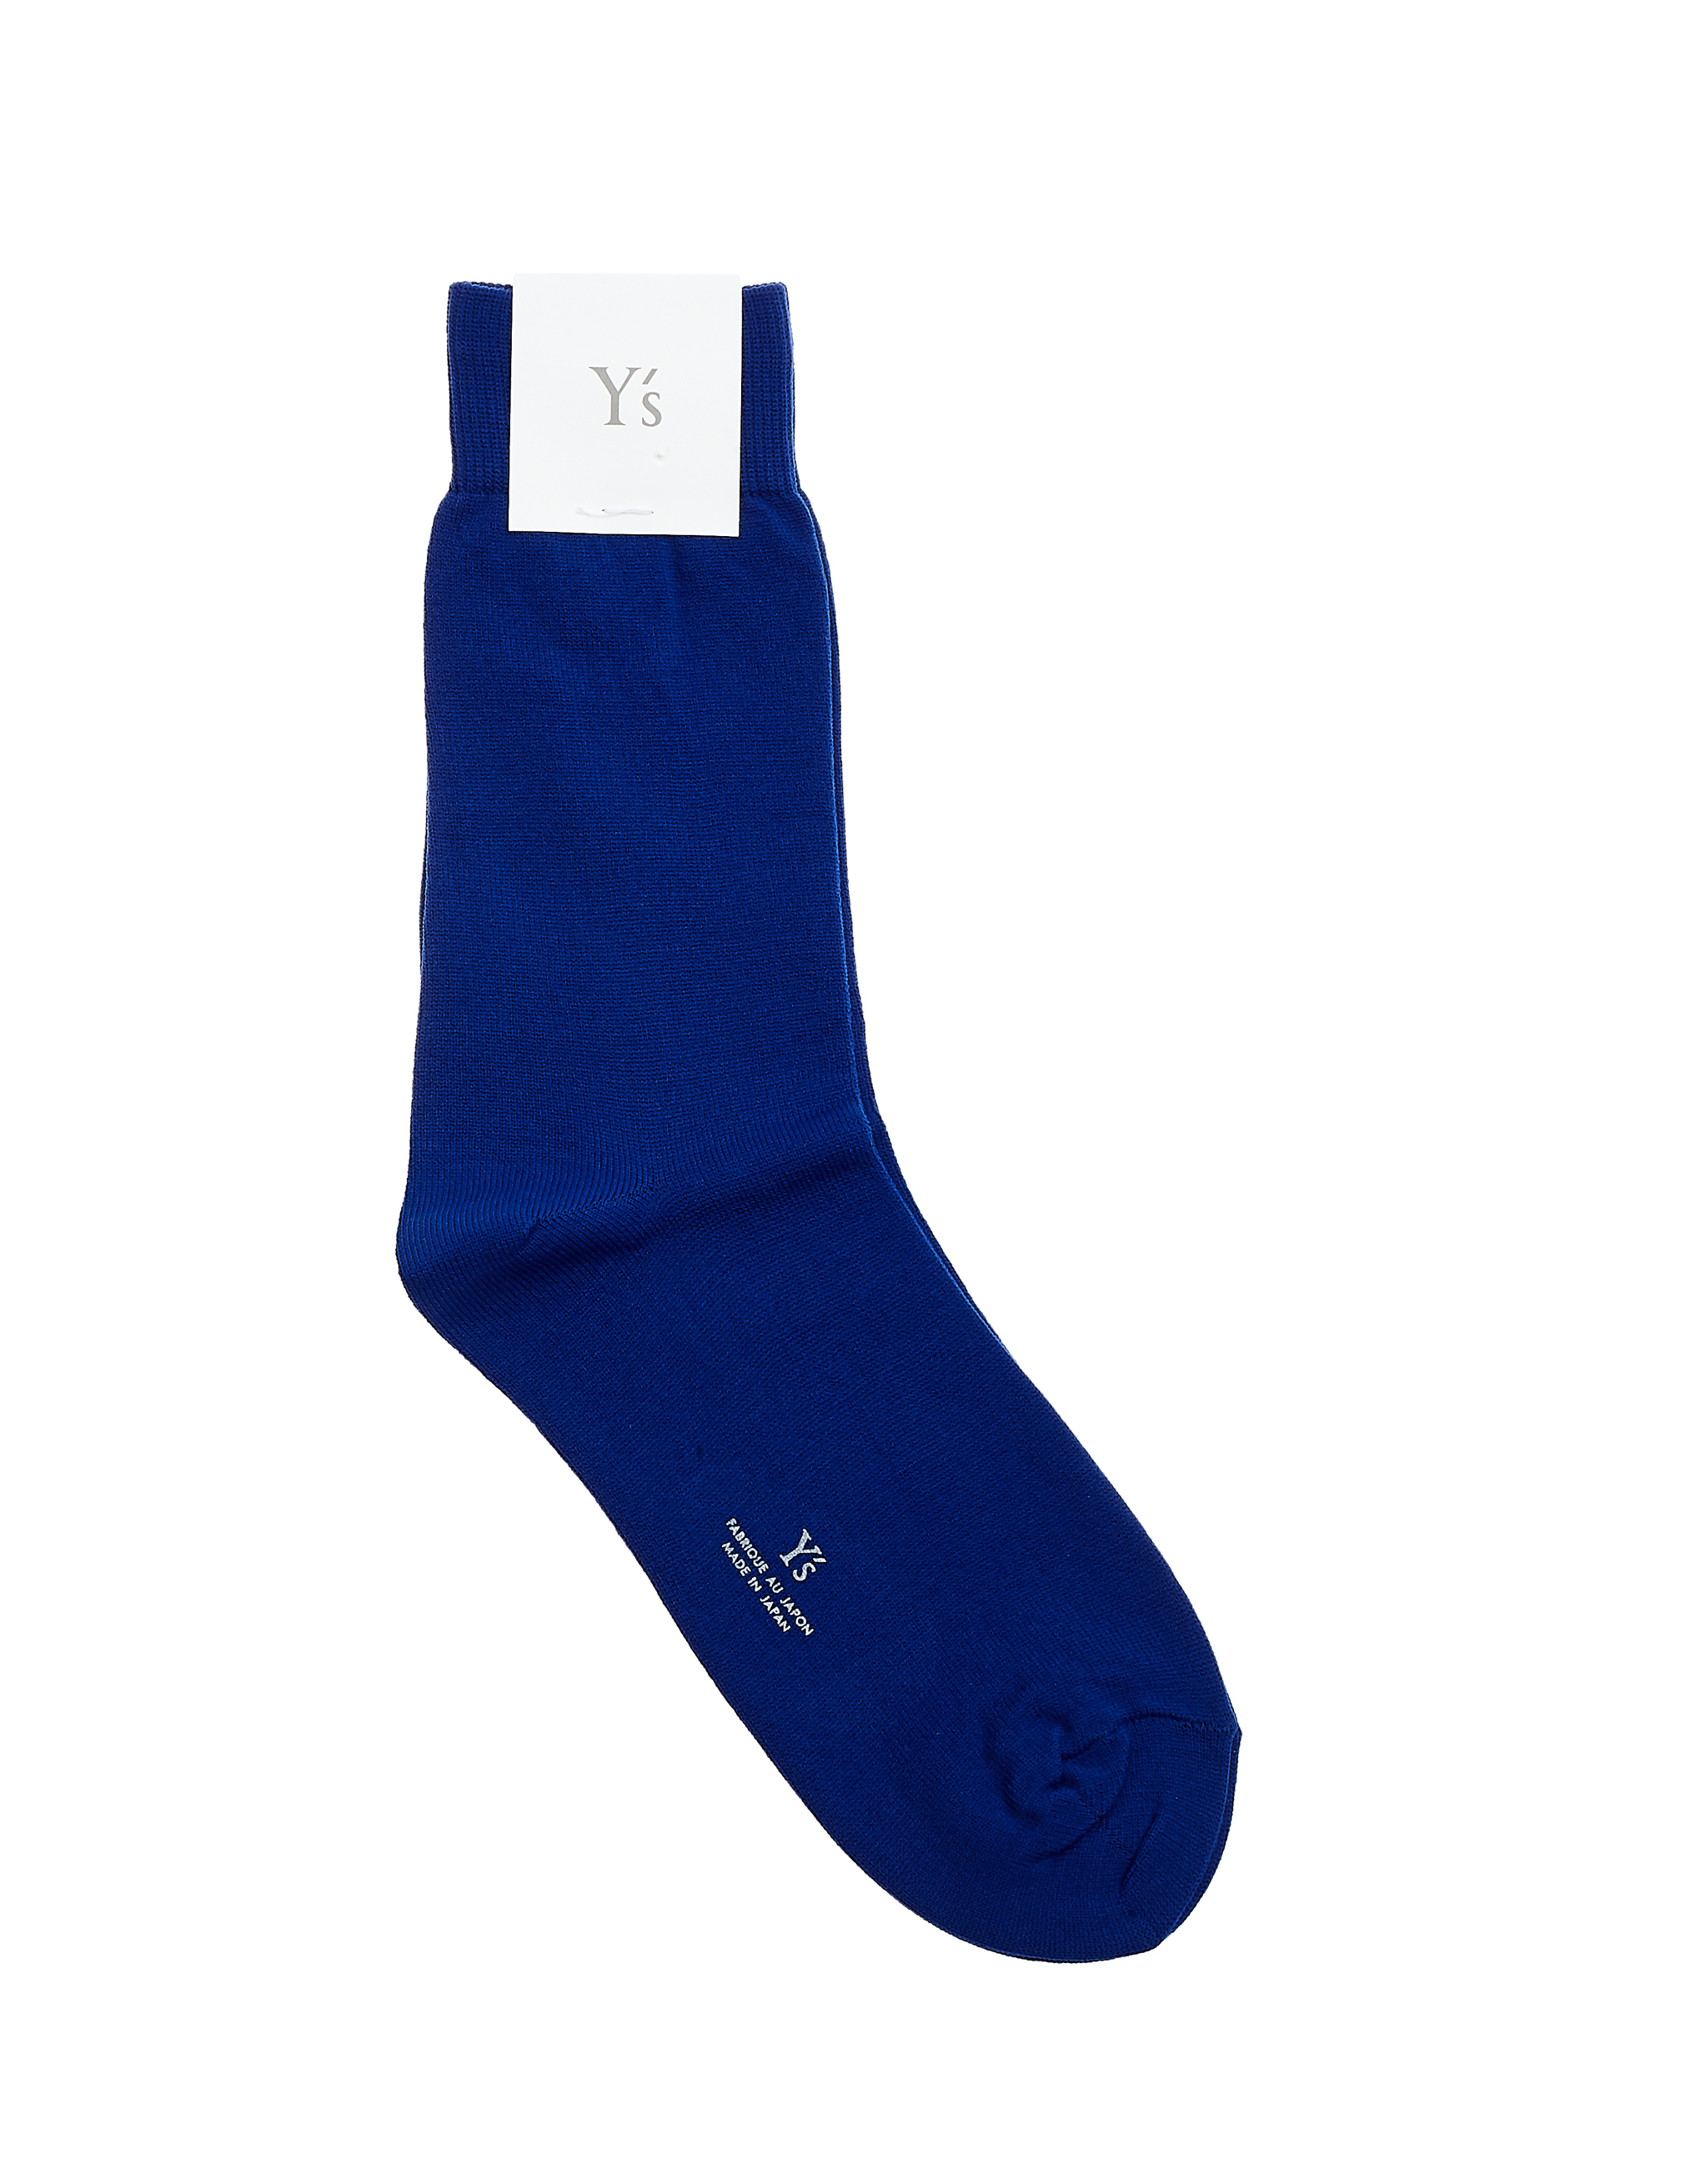 Синие носки. Голубые носки. Носки женские темно синие. Лечебные синие носки. Купить синие носки